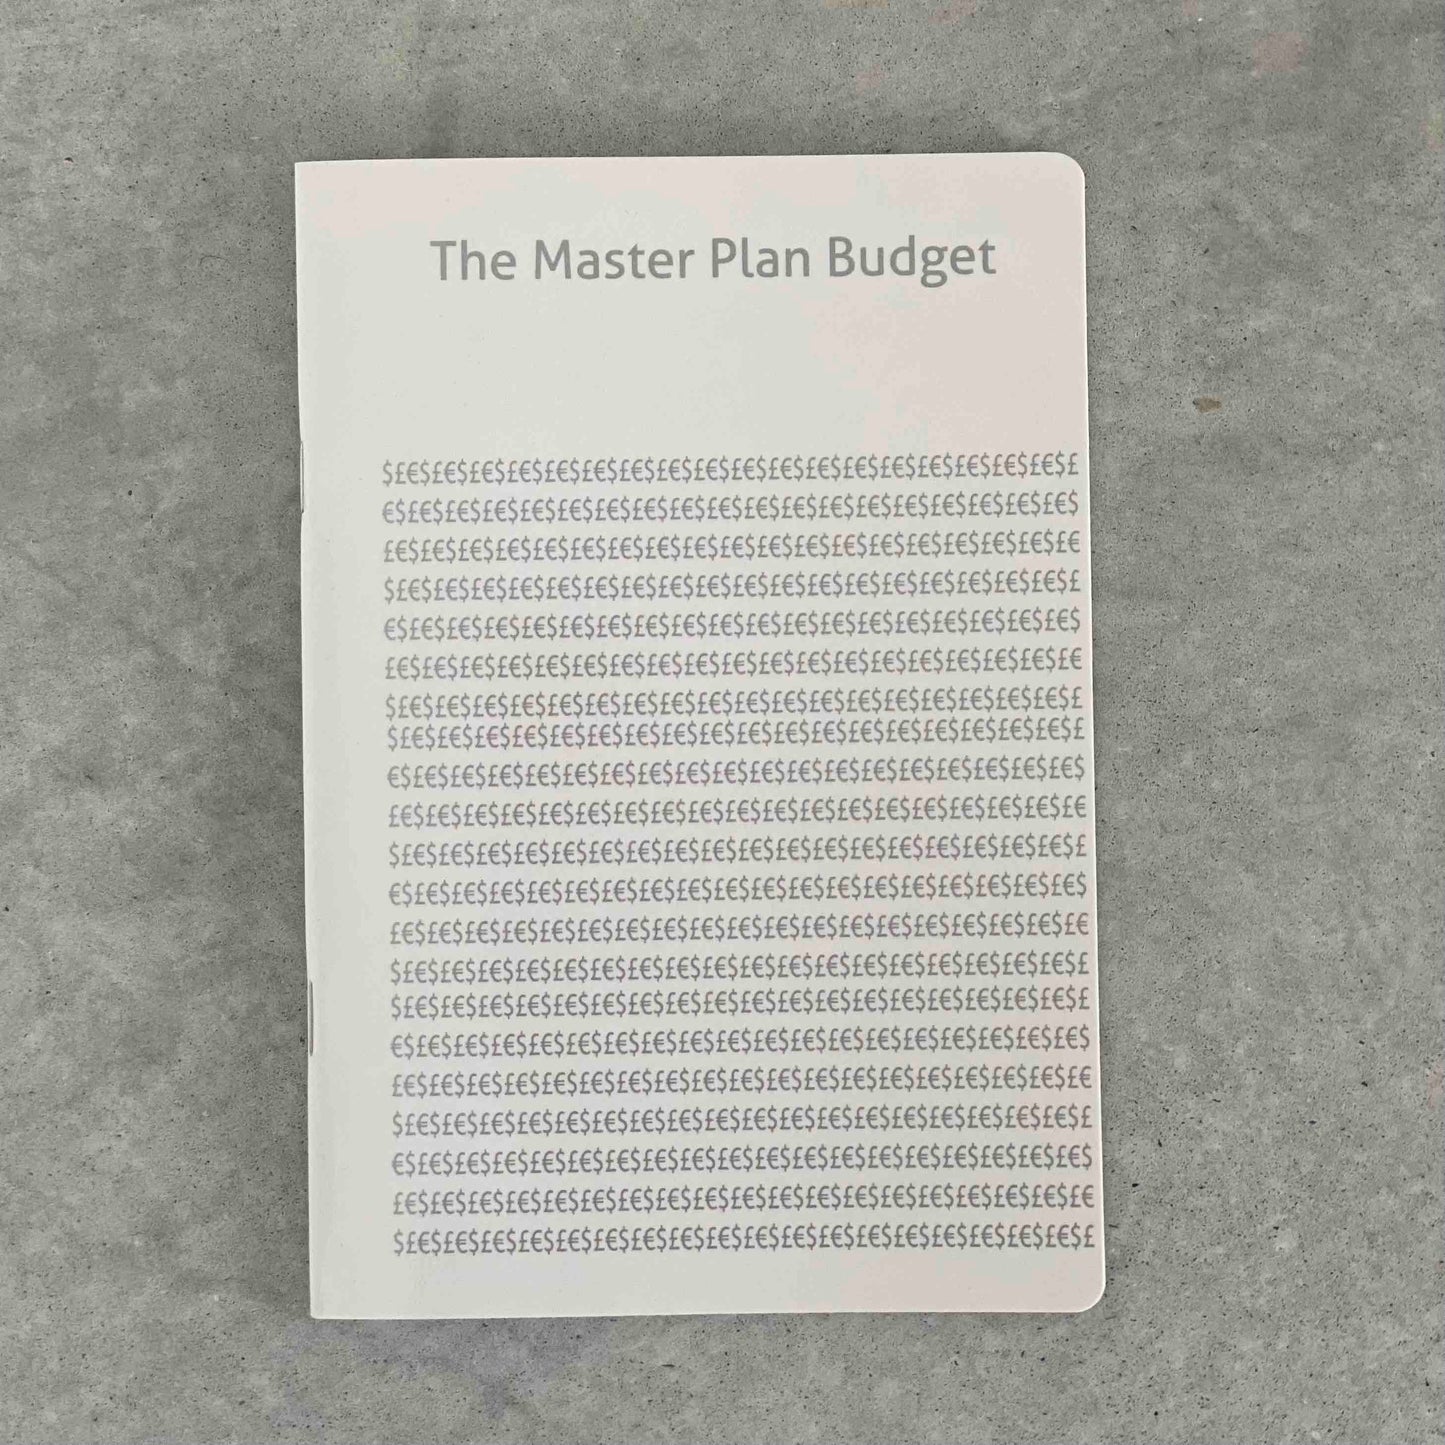 The Master Plan Budget